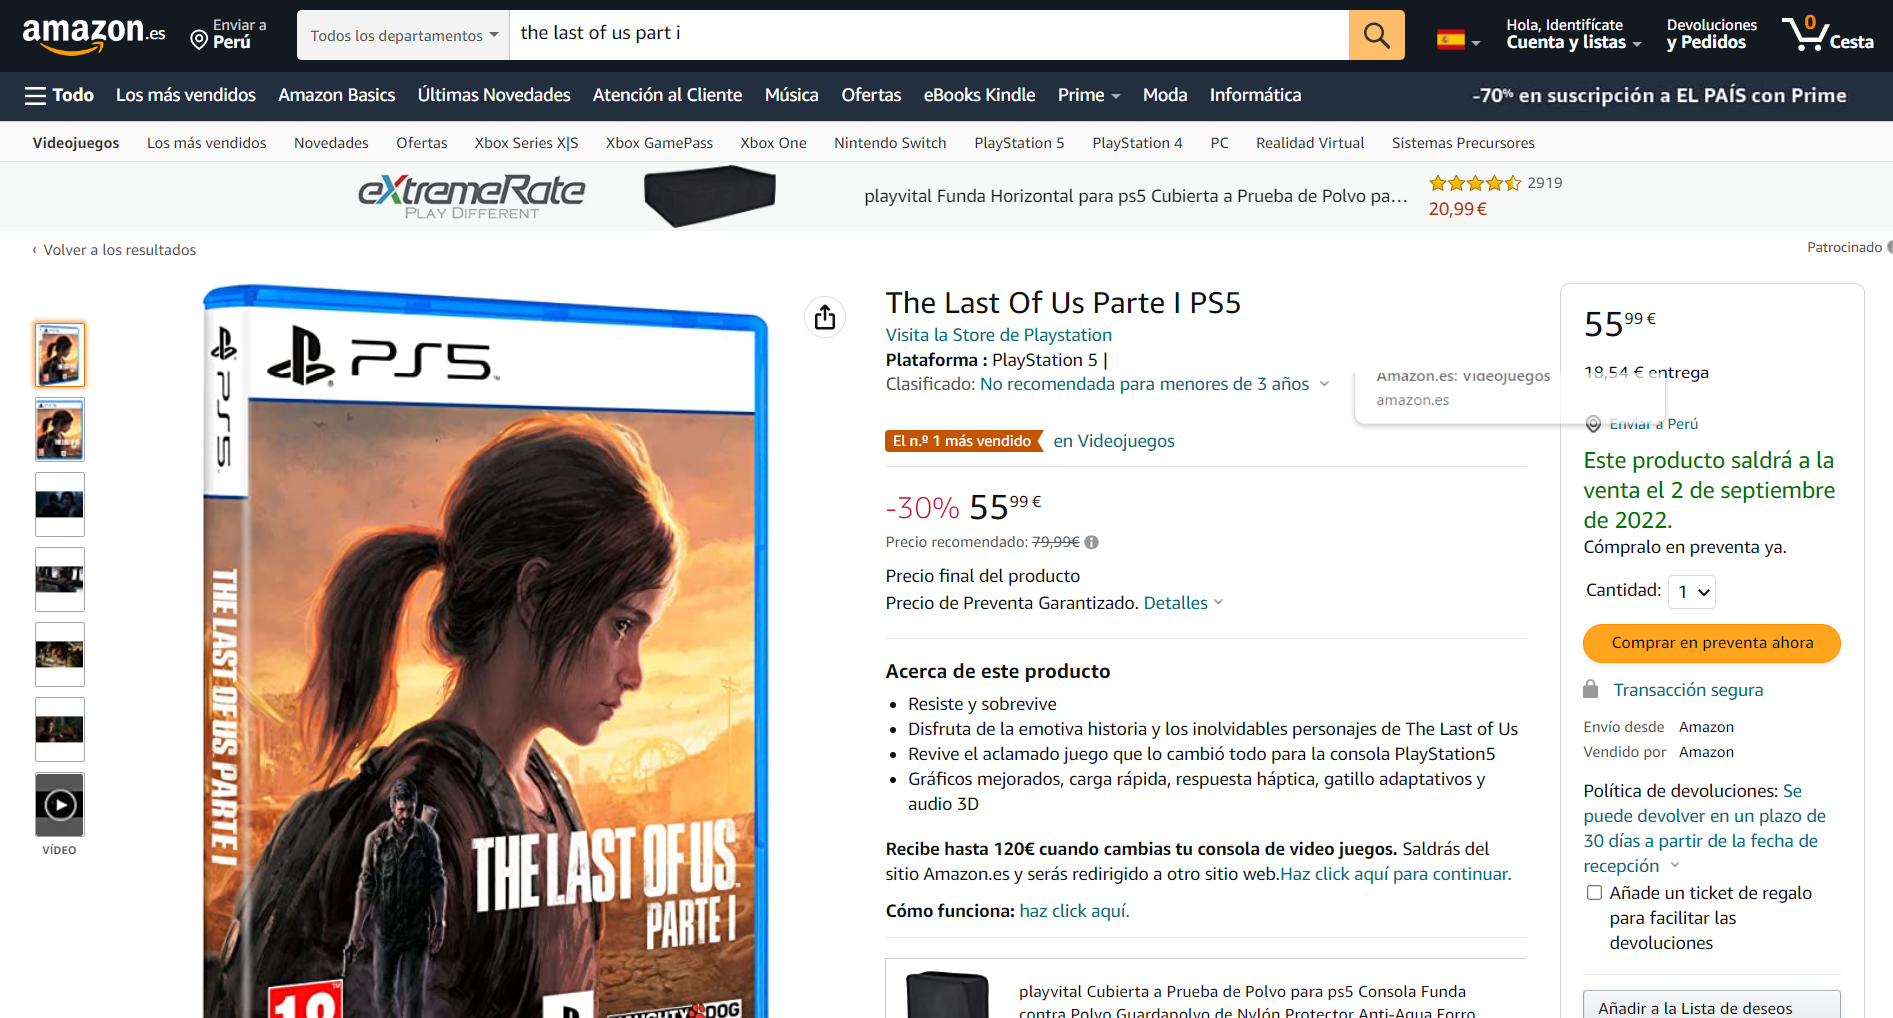 Amazon The Last of Us Part I